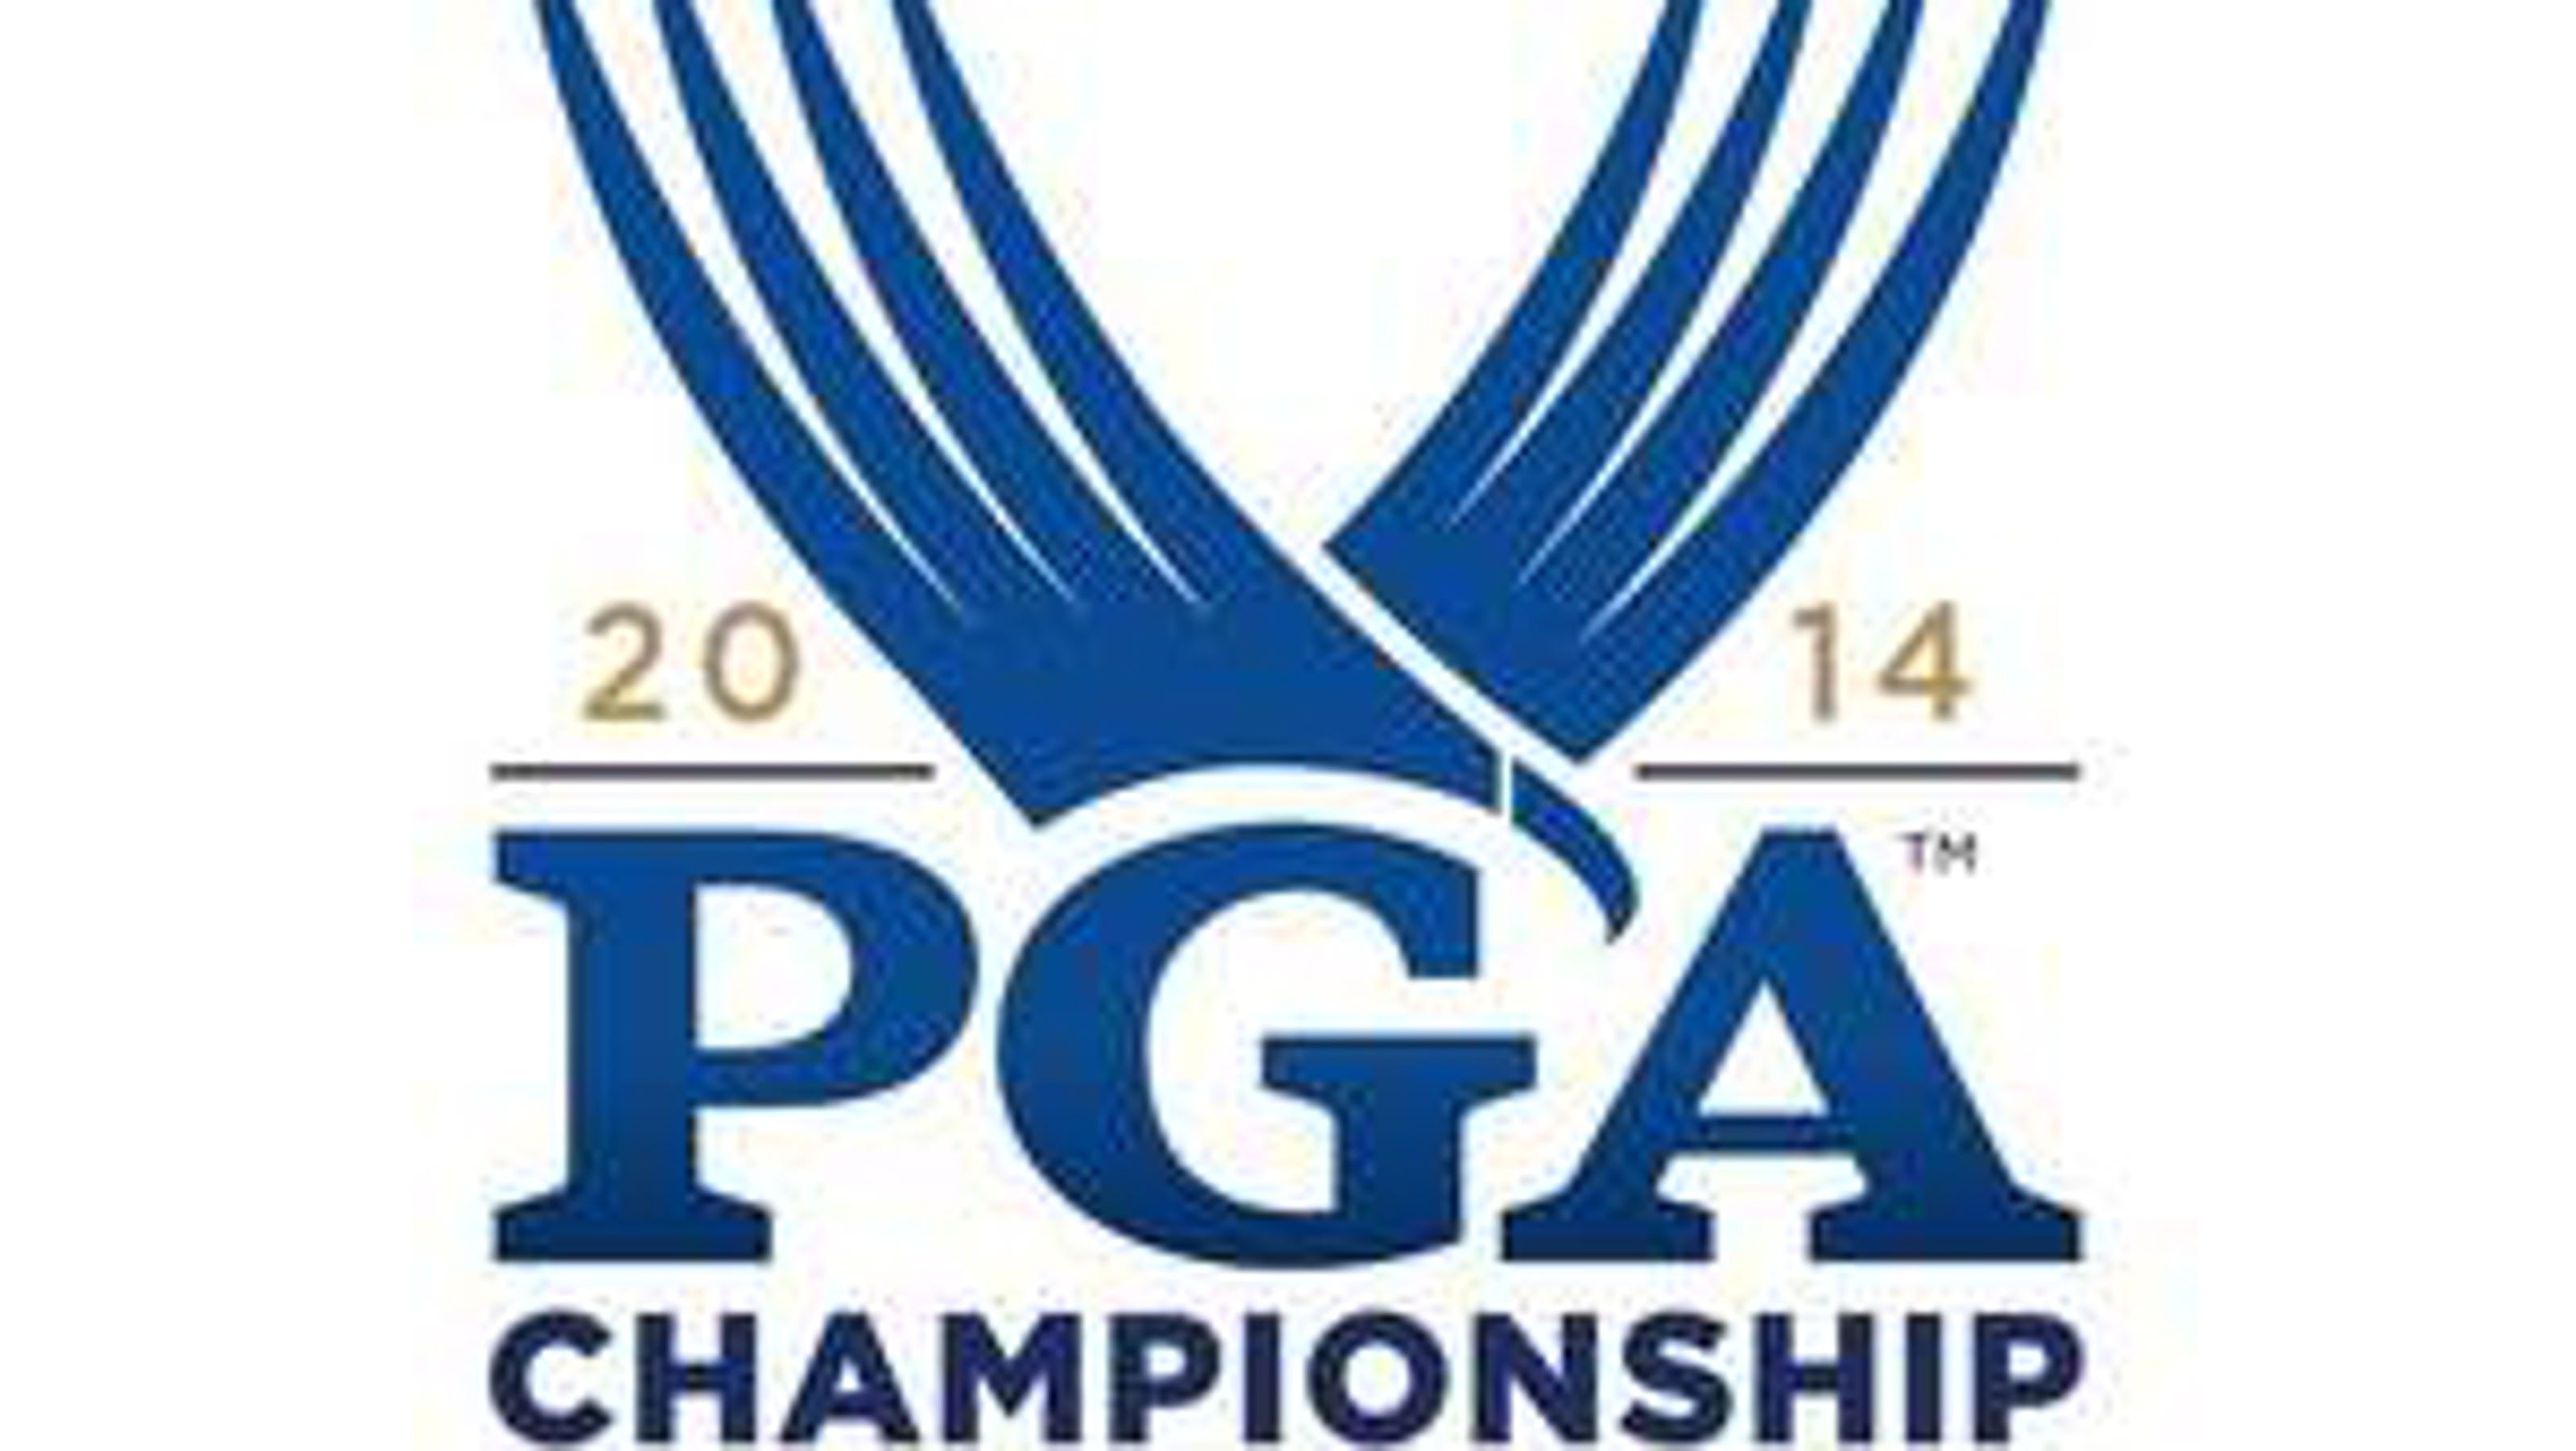 Ticket sales resume for 2014 PGA Championship at Valhalla